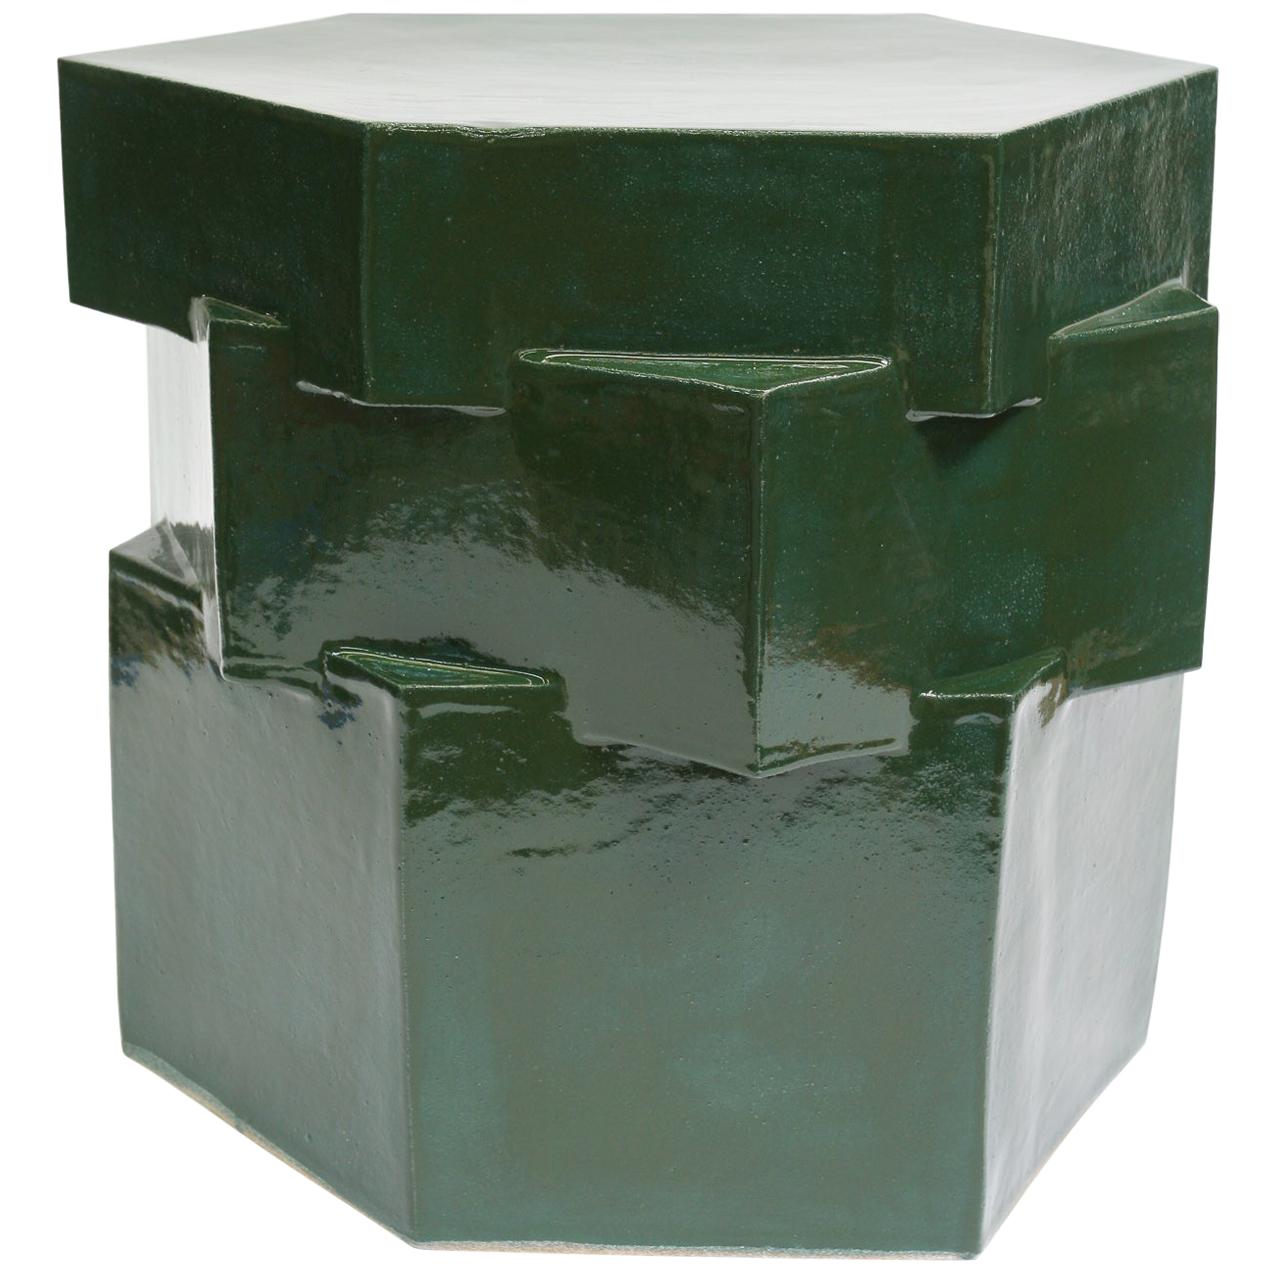 Triple Tier Ceramic Hex Side Table in Chrome Green by BZIPPY